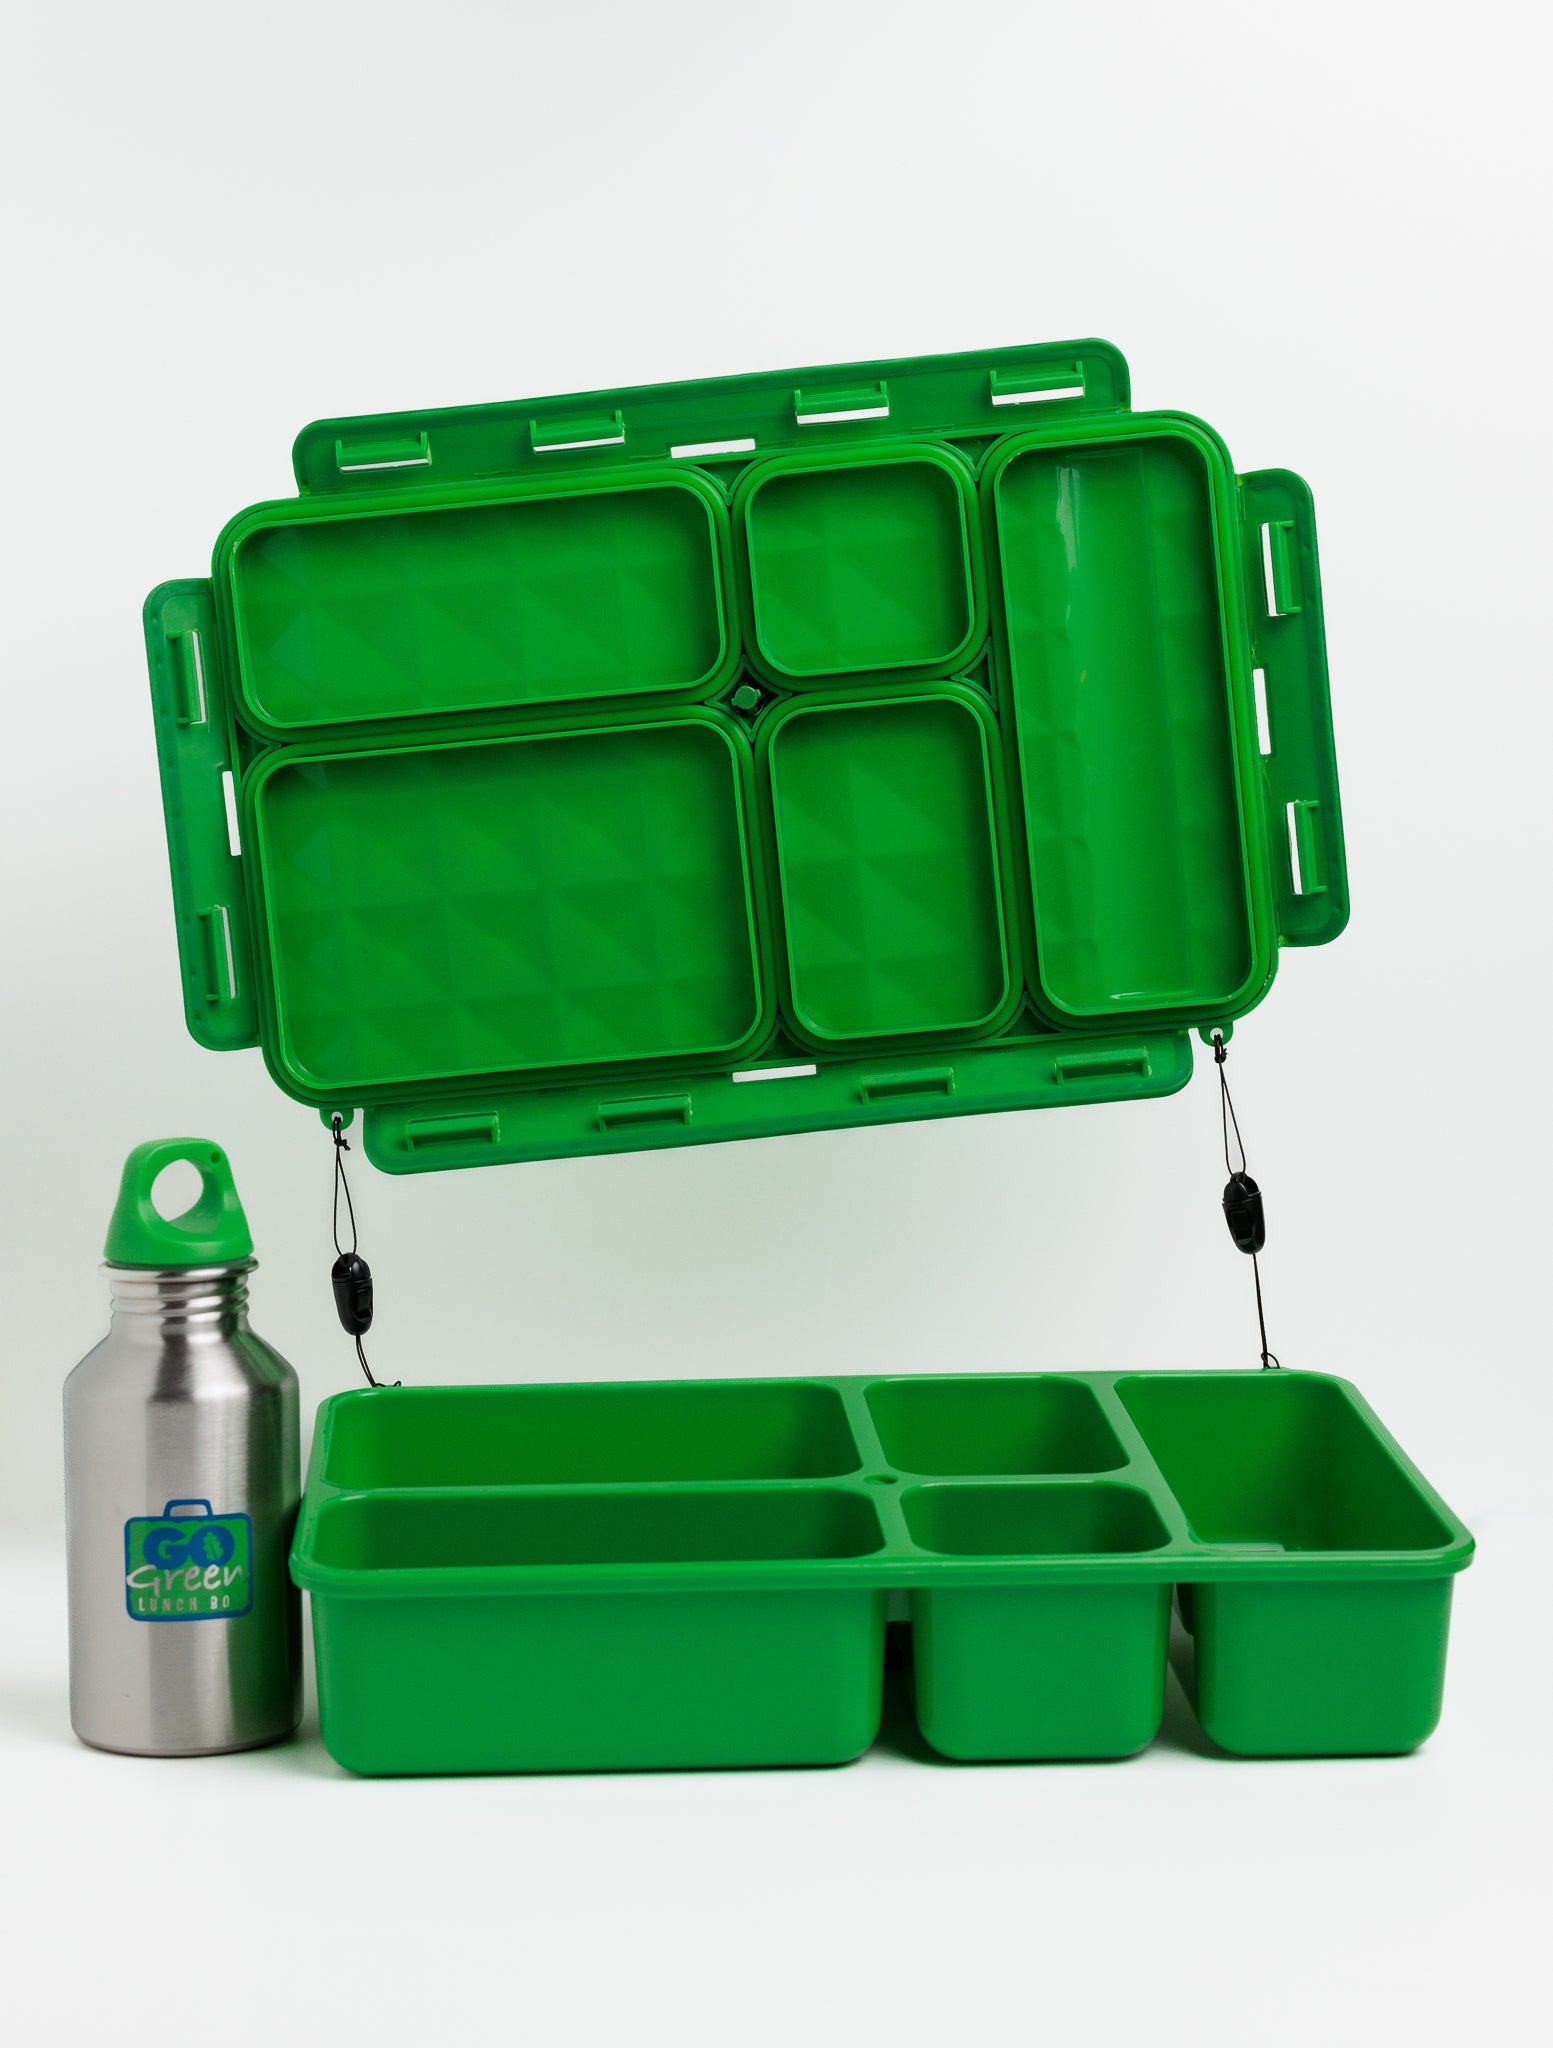 Go Green Lunchbox Original